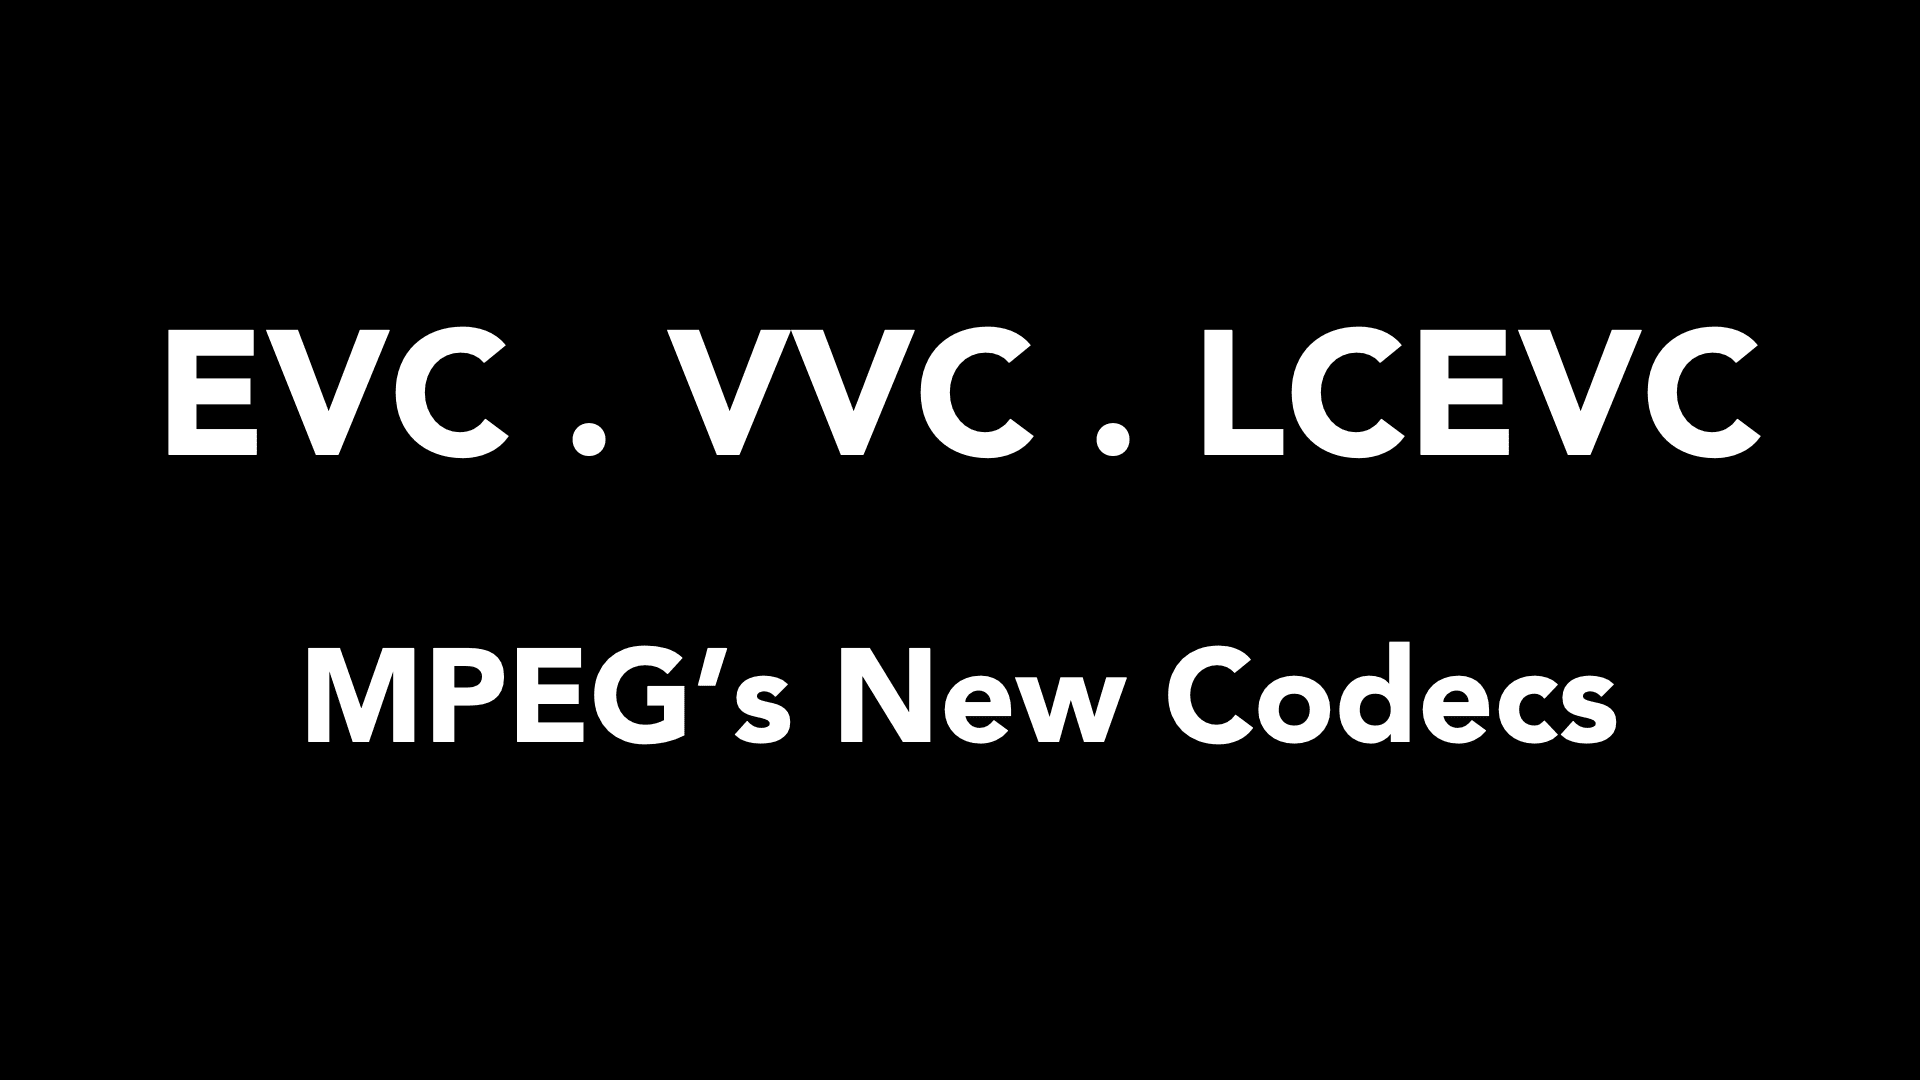 VVC, EVC, LCEVC - MPEG's New Video Codecs